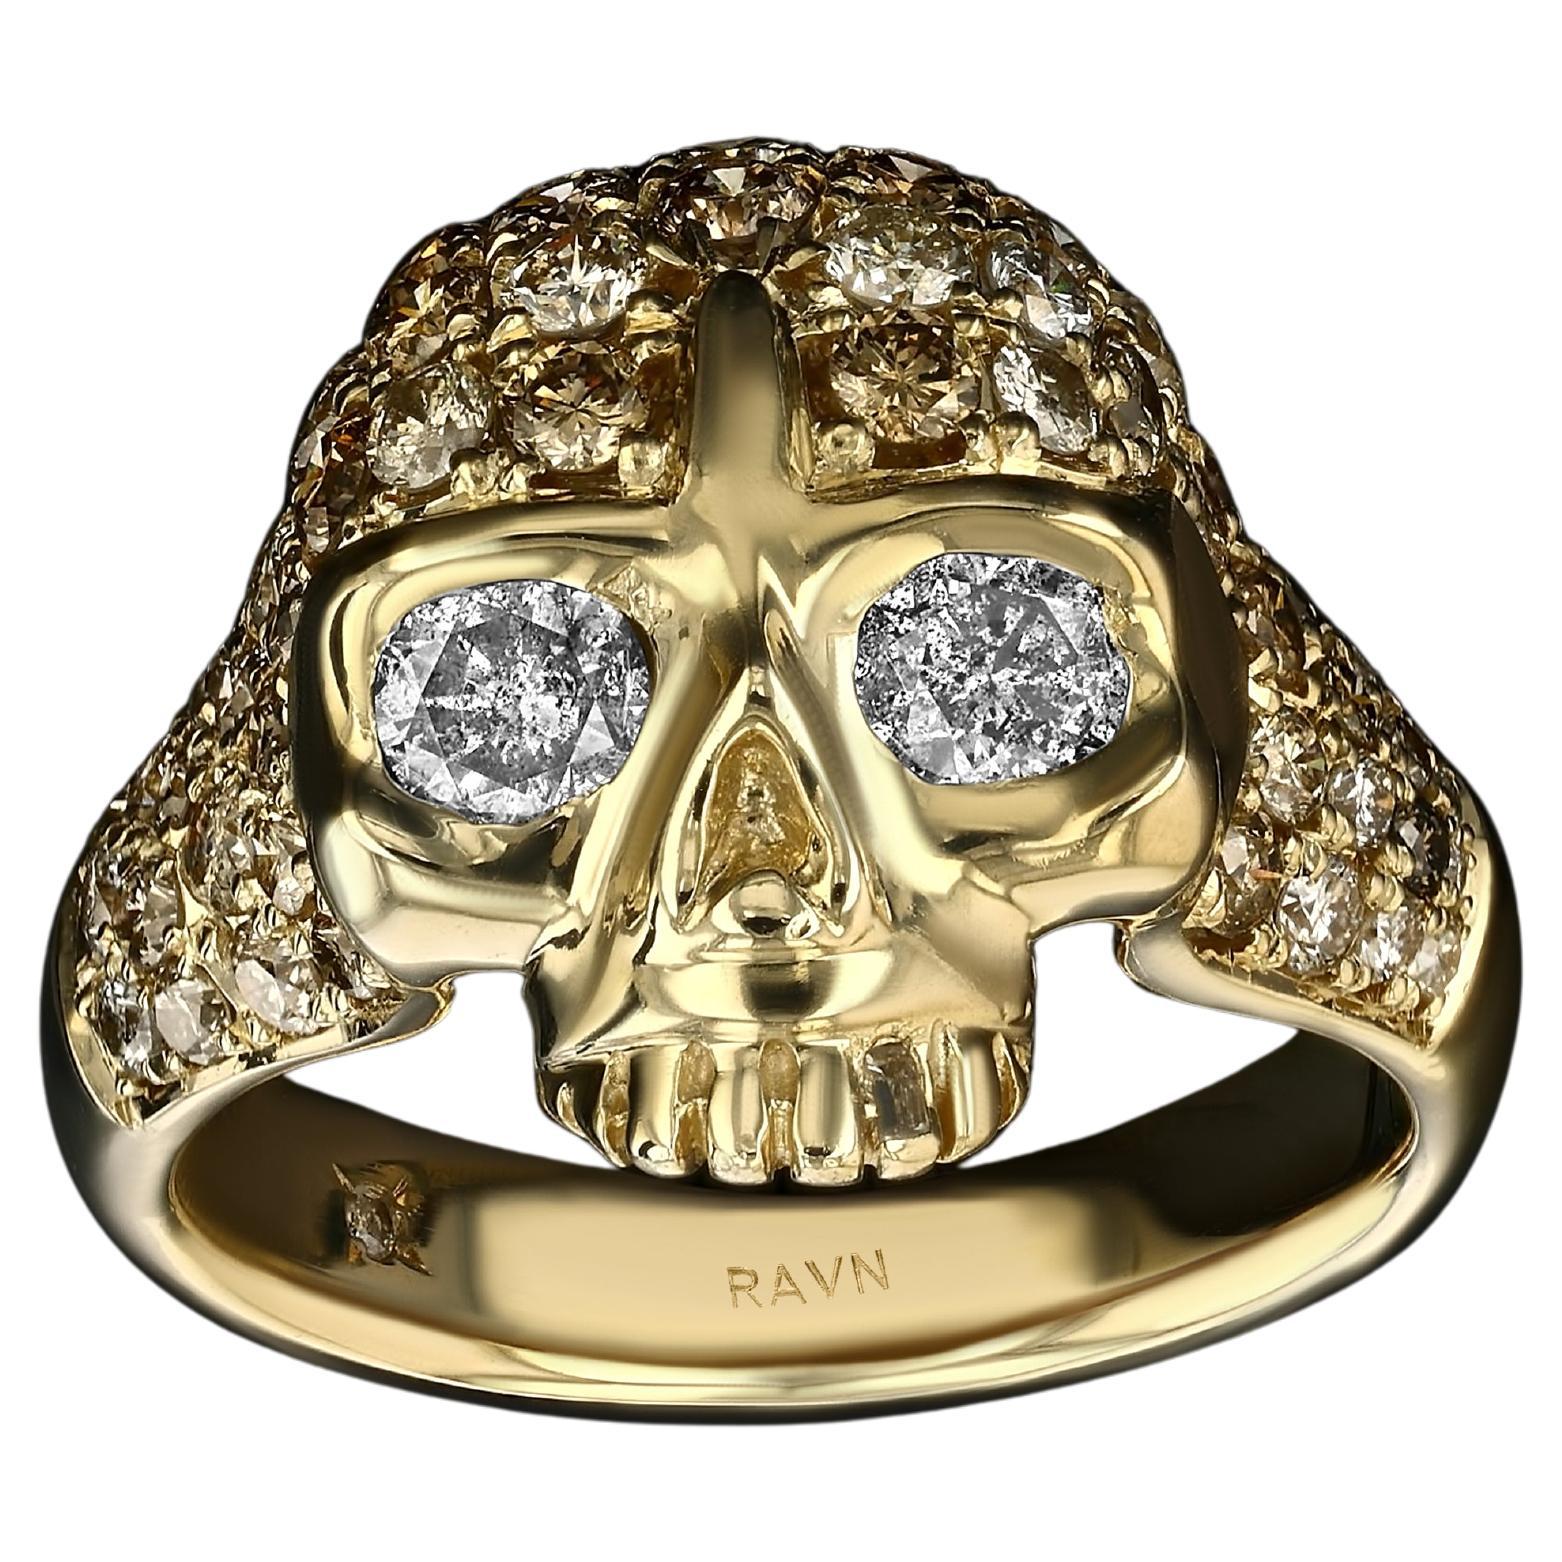 House of RAVN, 18k Gold Hand Carved Bling Petite Skull Ring with Diamond Eyes For Sale